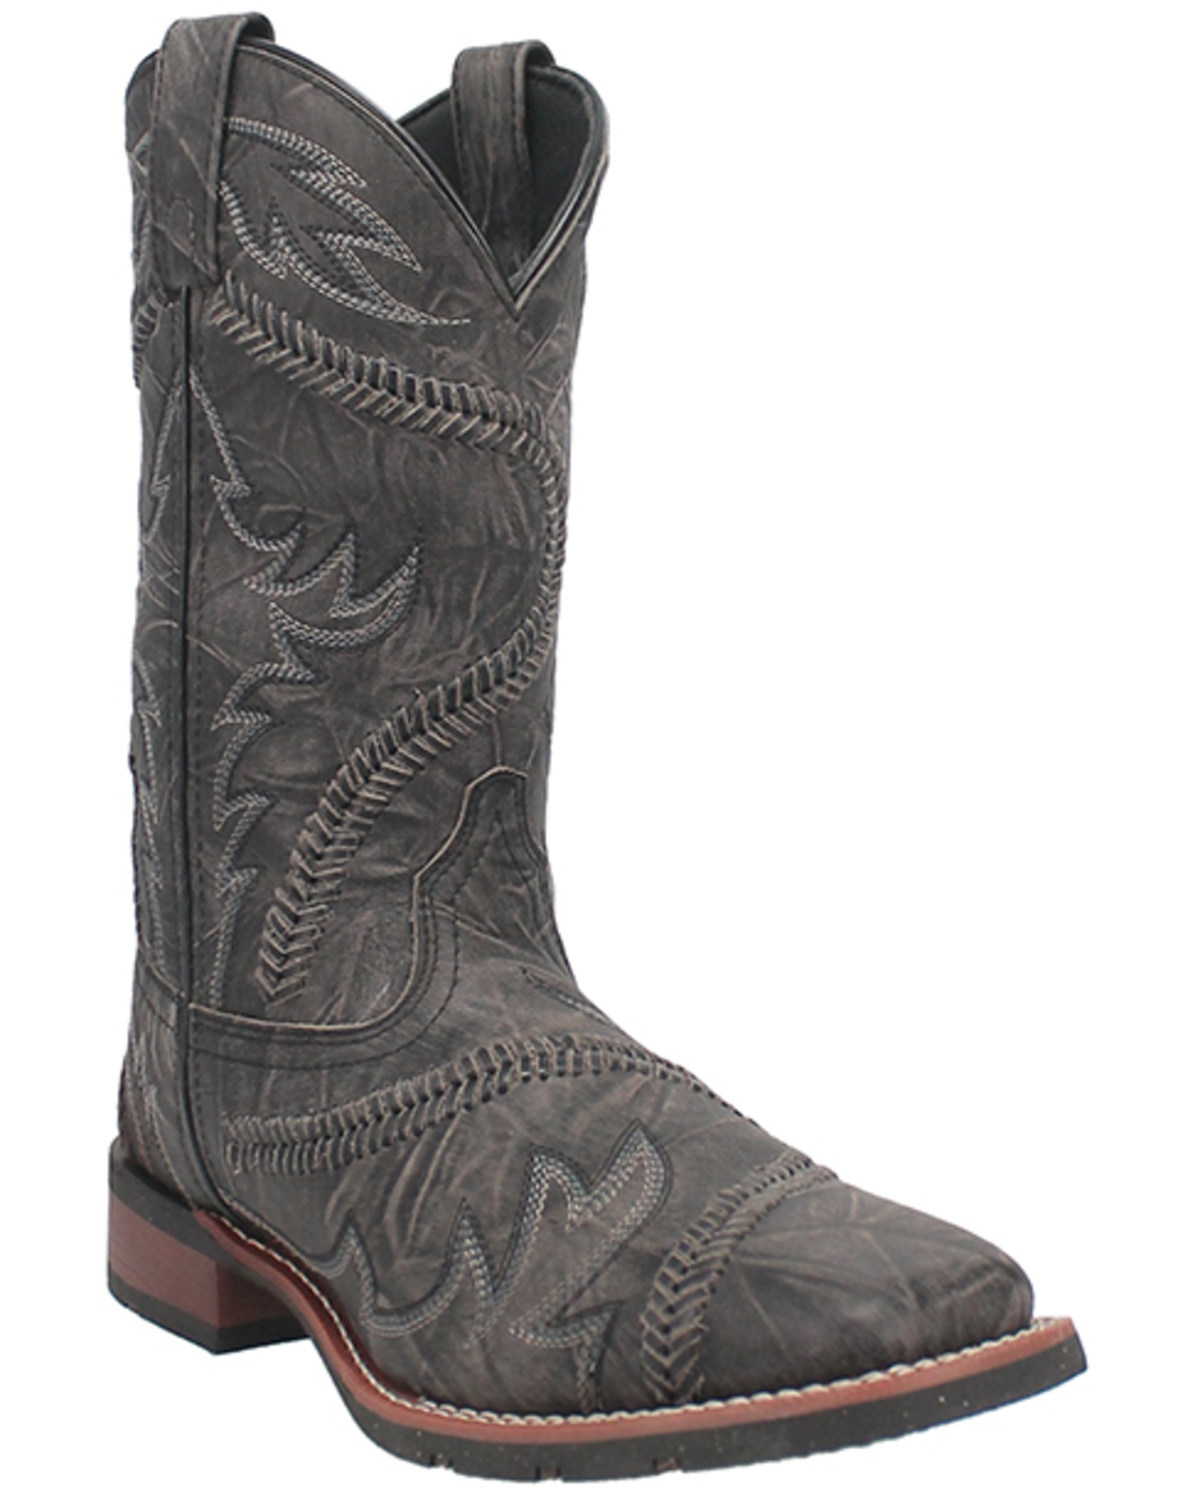 Laredo Men's 11" Kade Western Boots - Broad Square Toe